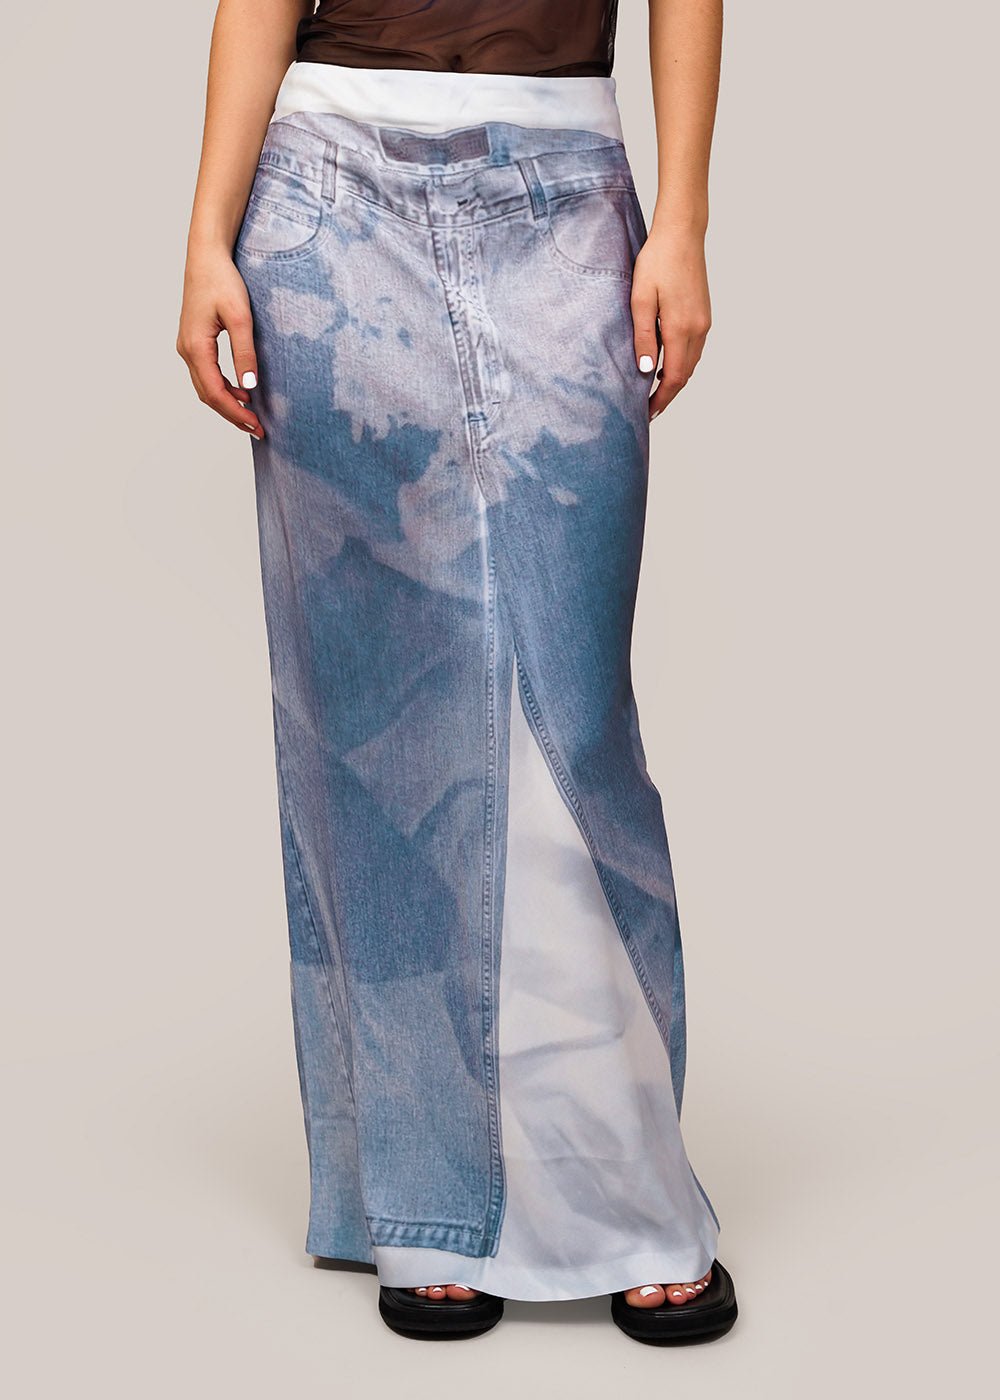 Handy Jean Print Silky Ankle Skirt in Blue by ELLISS – New Classics Studios